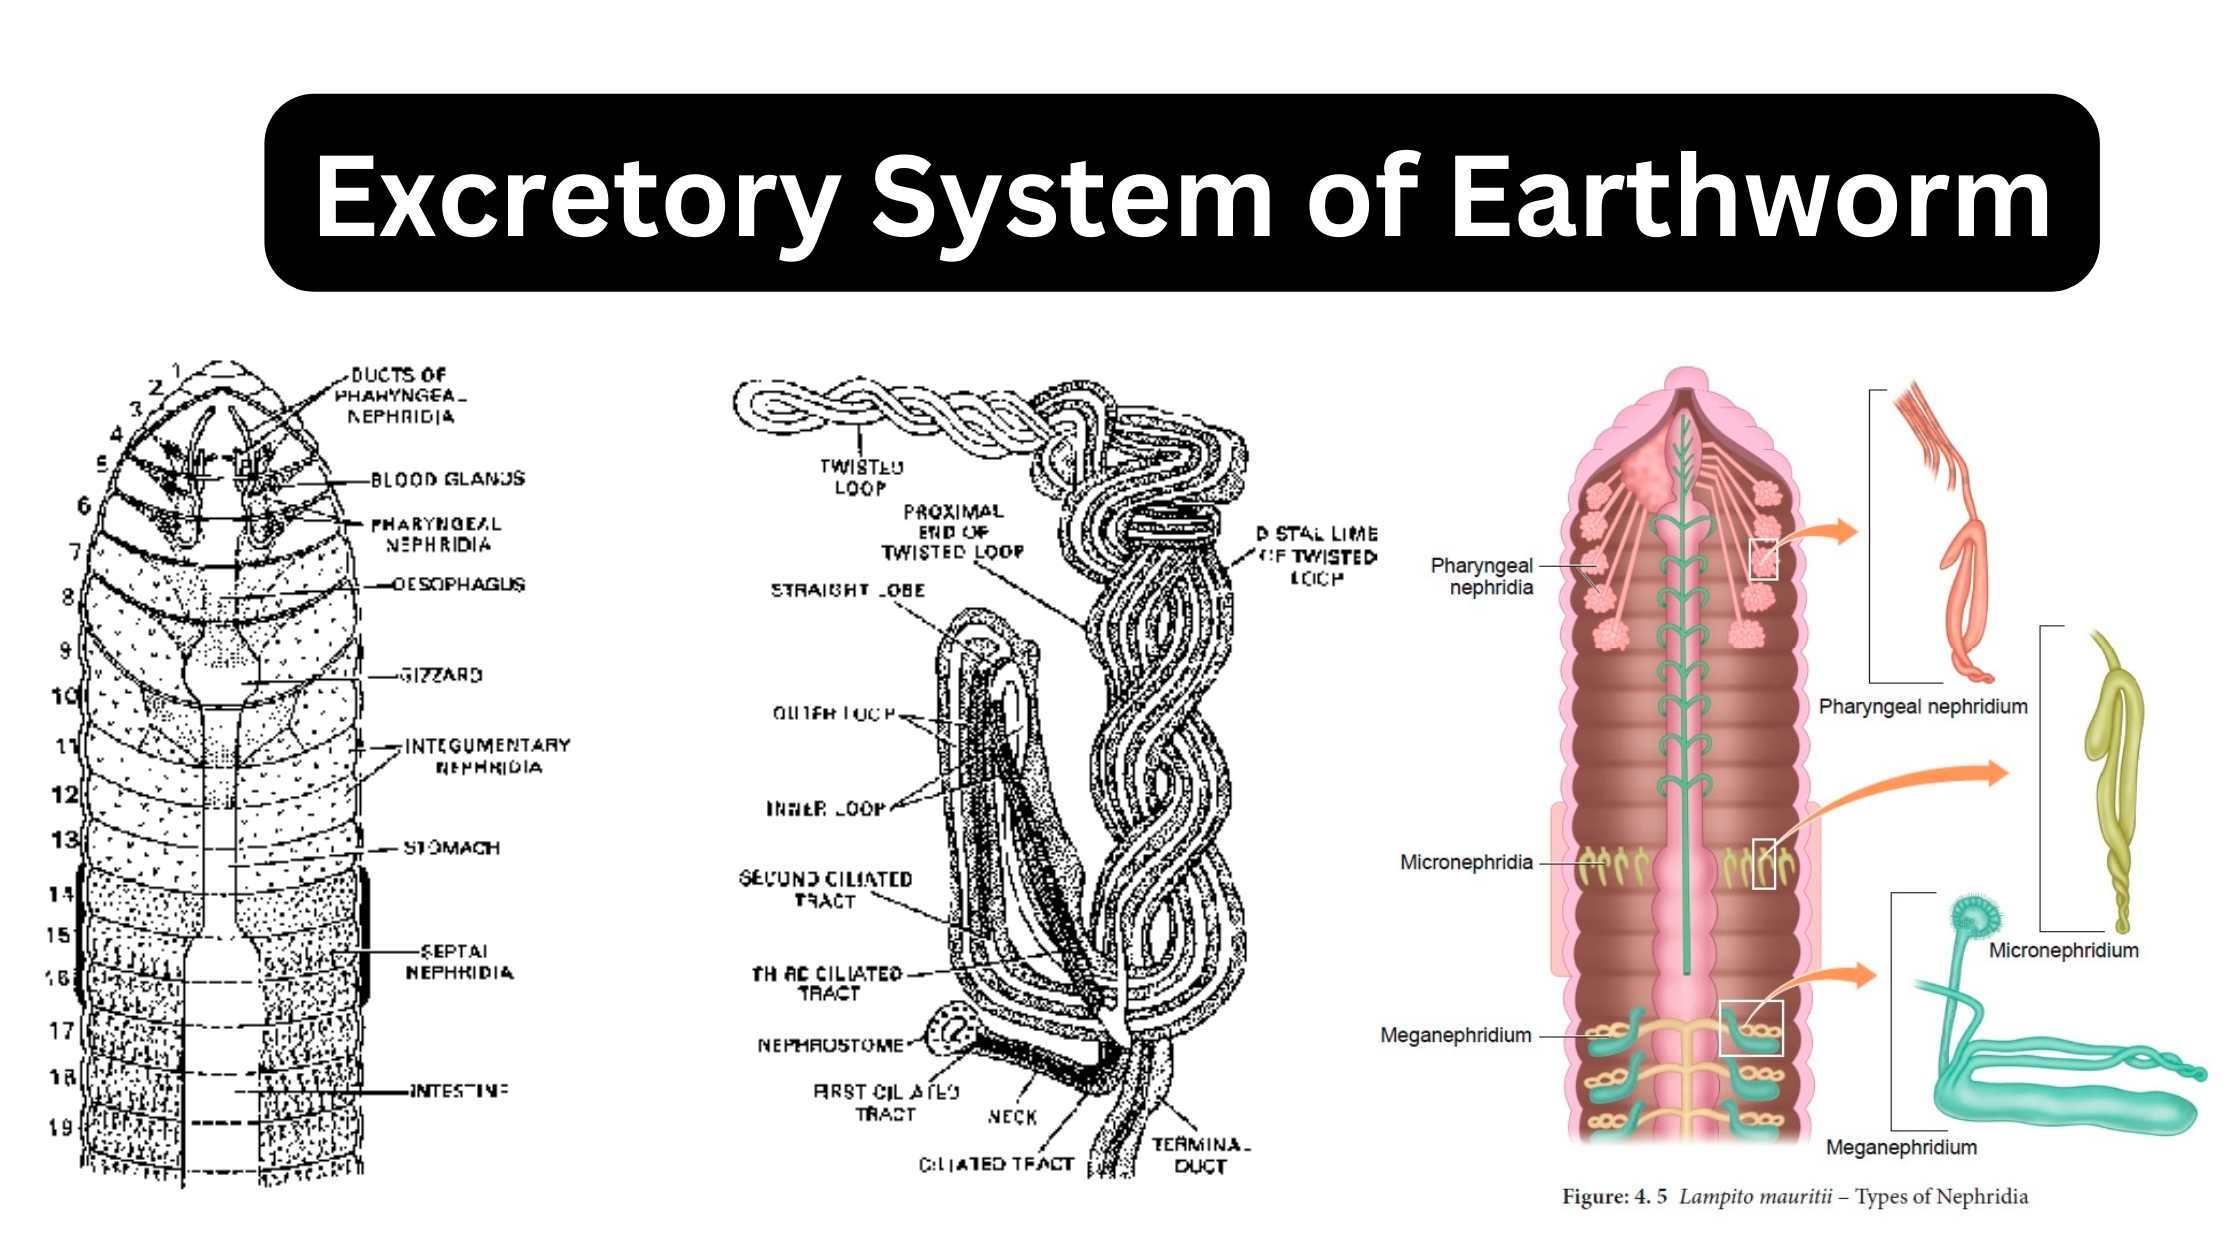 Excretory System of Earthworm